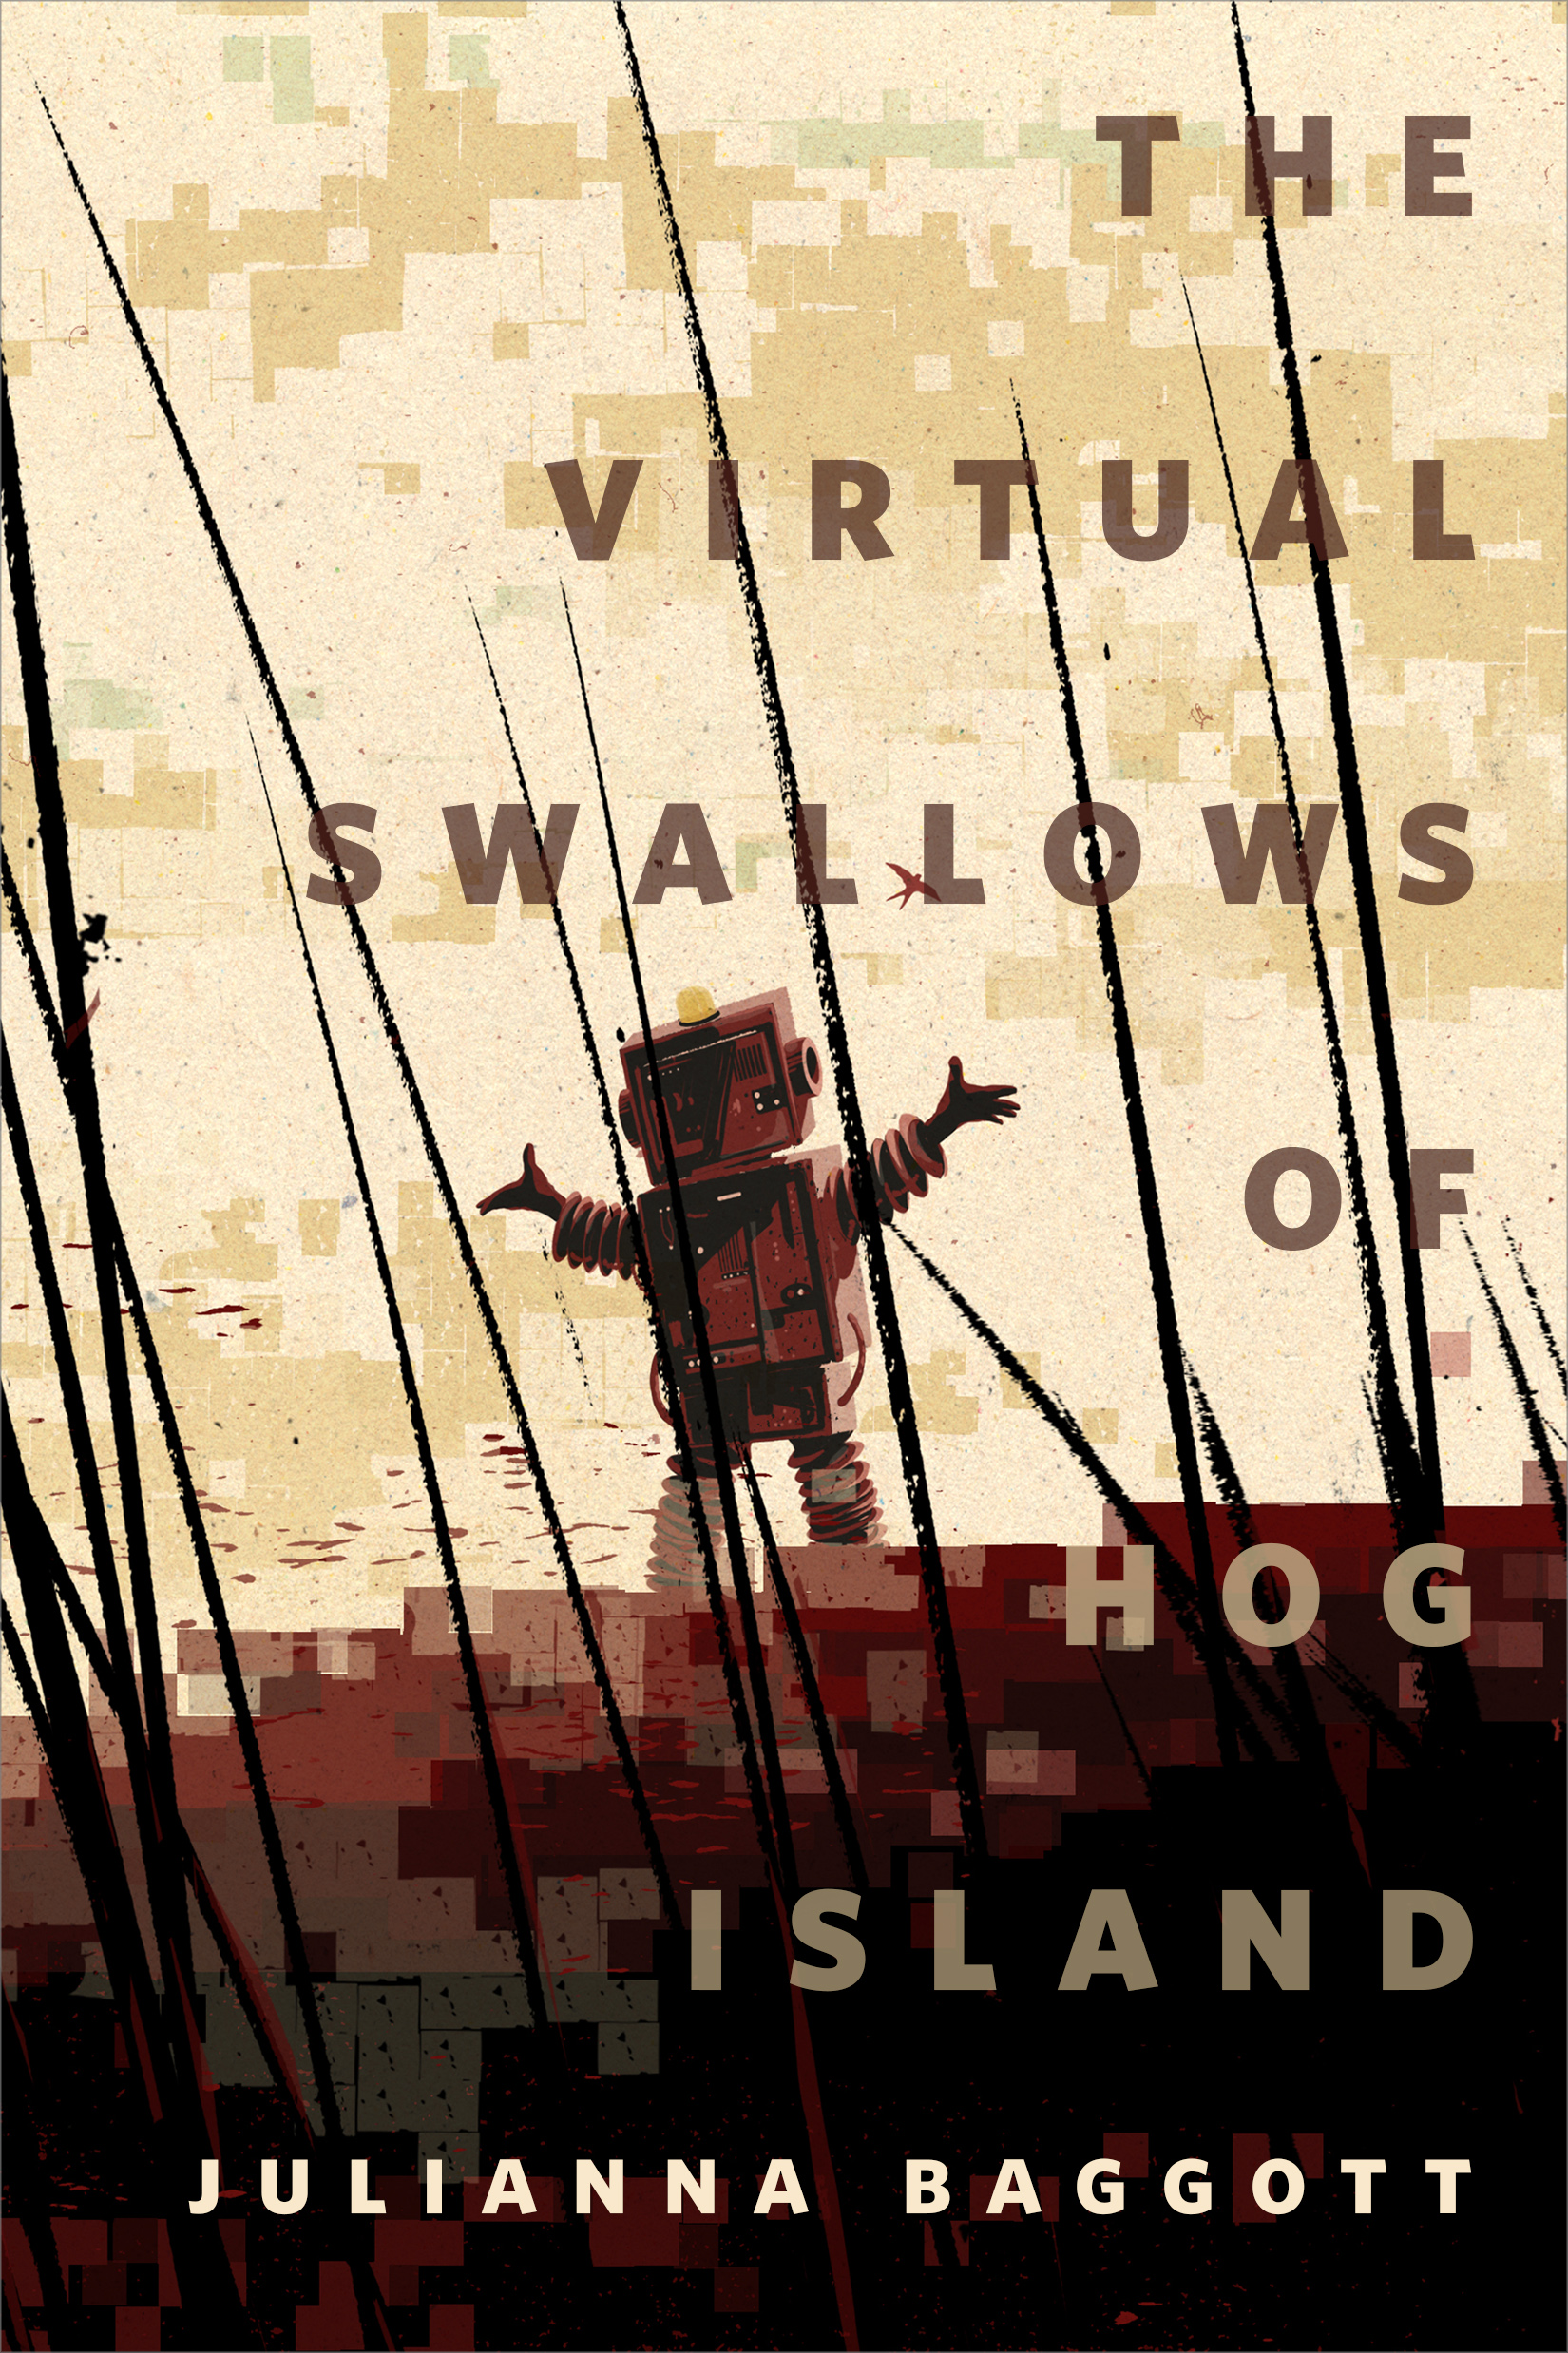 The Virtual Swallows of Hog Island : A Tor.com Original by Julianna Baggott